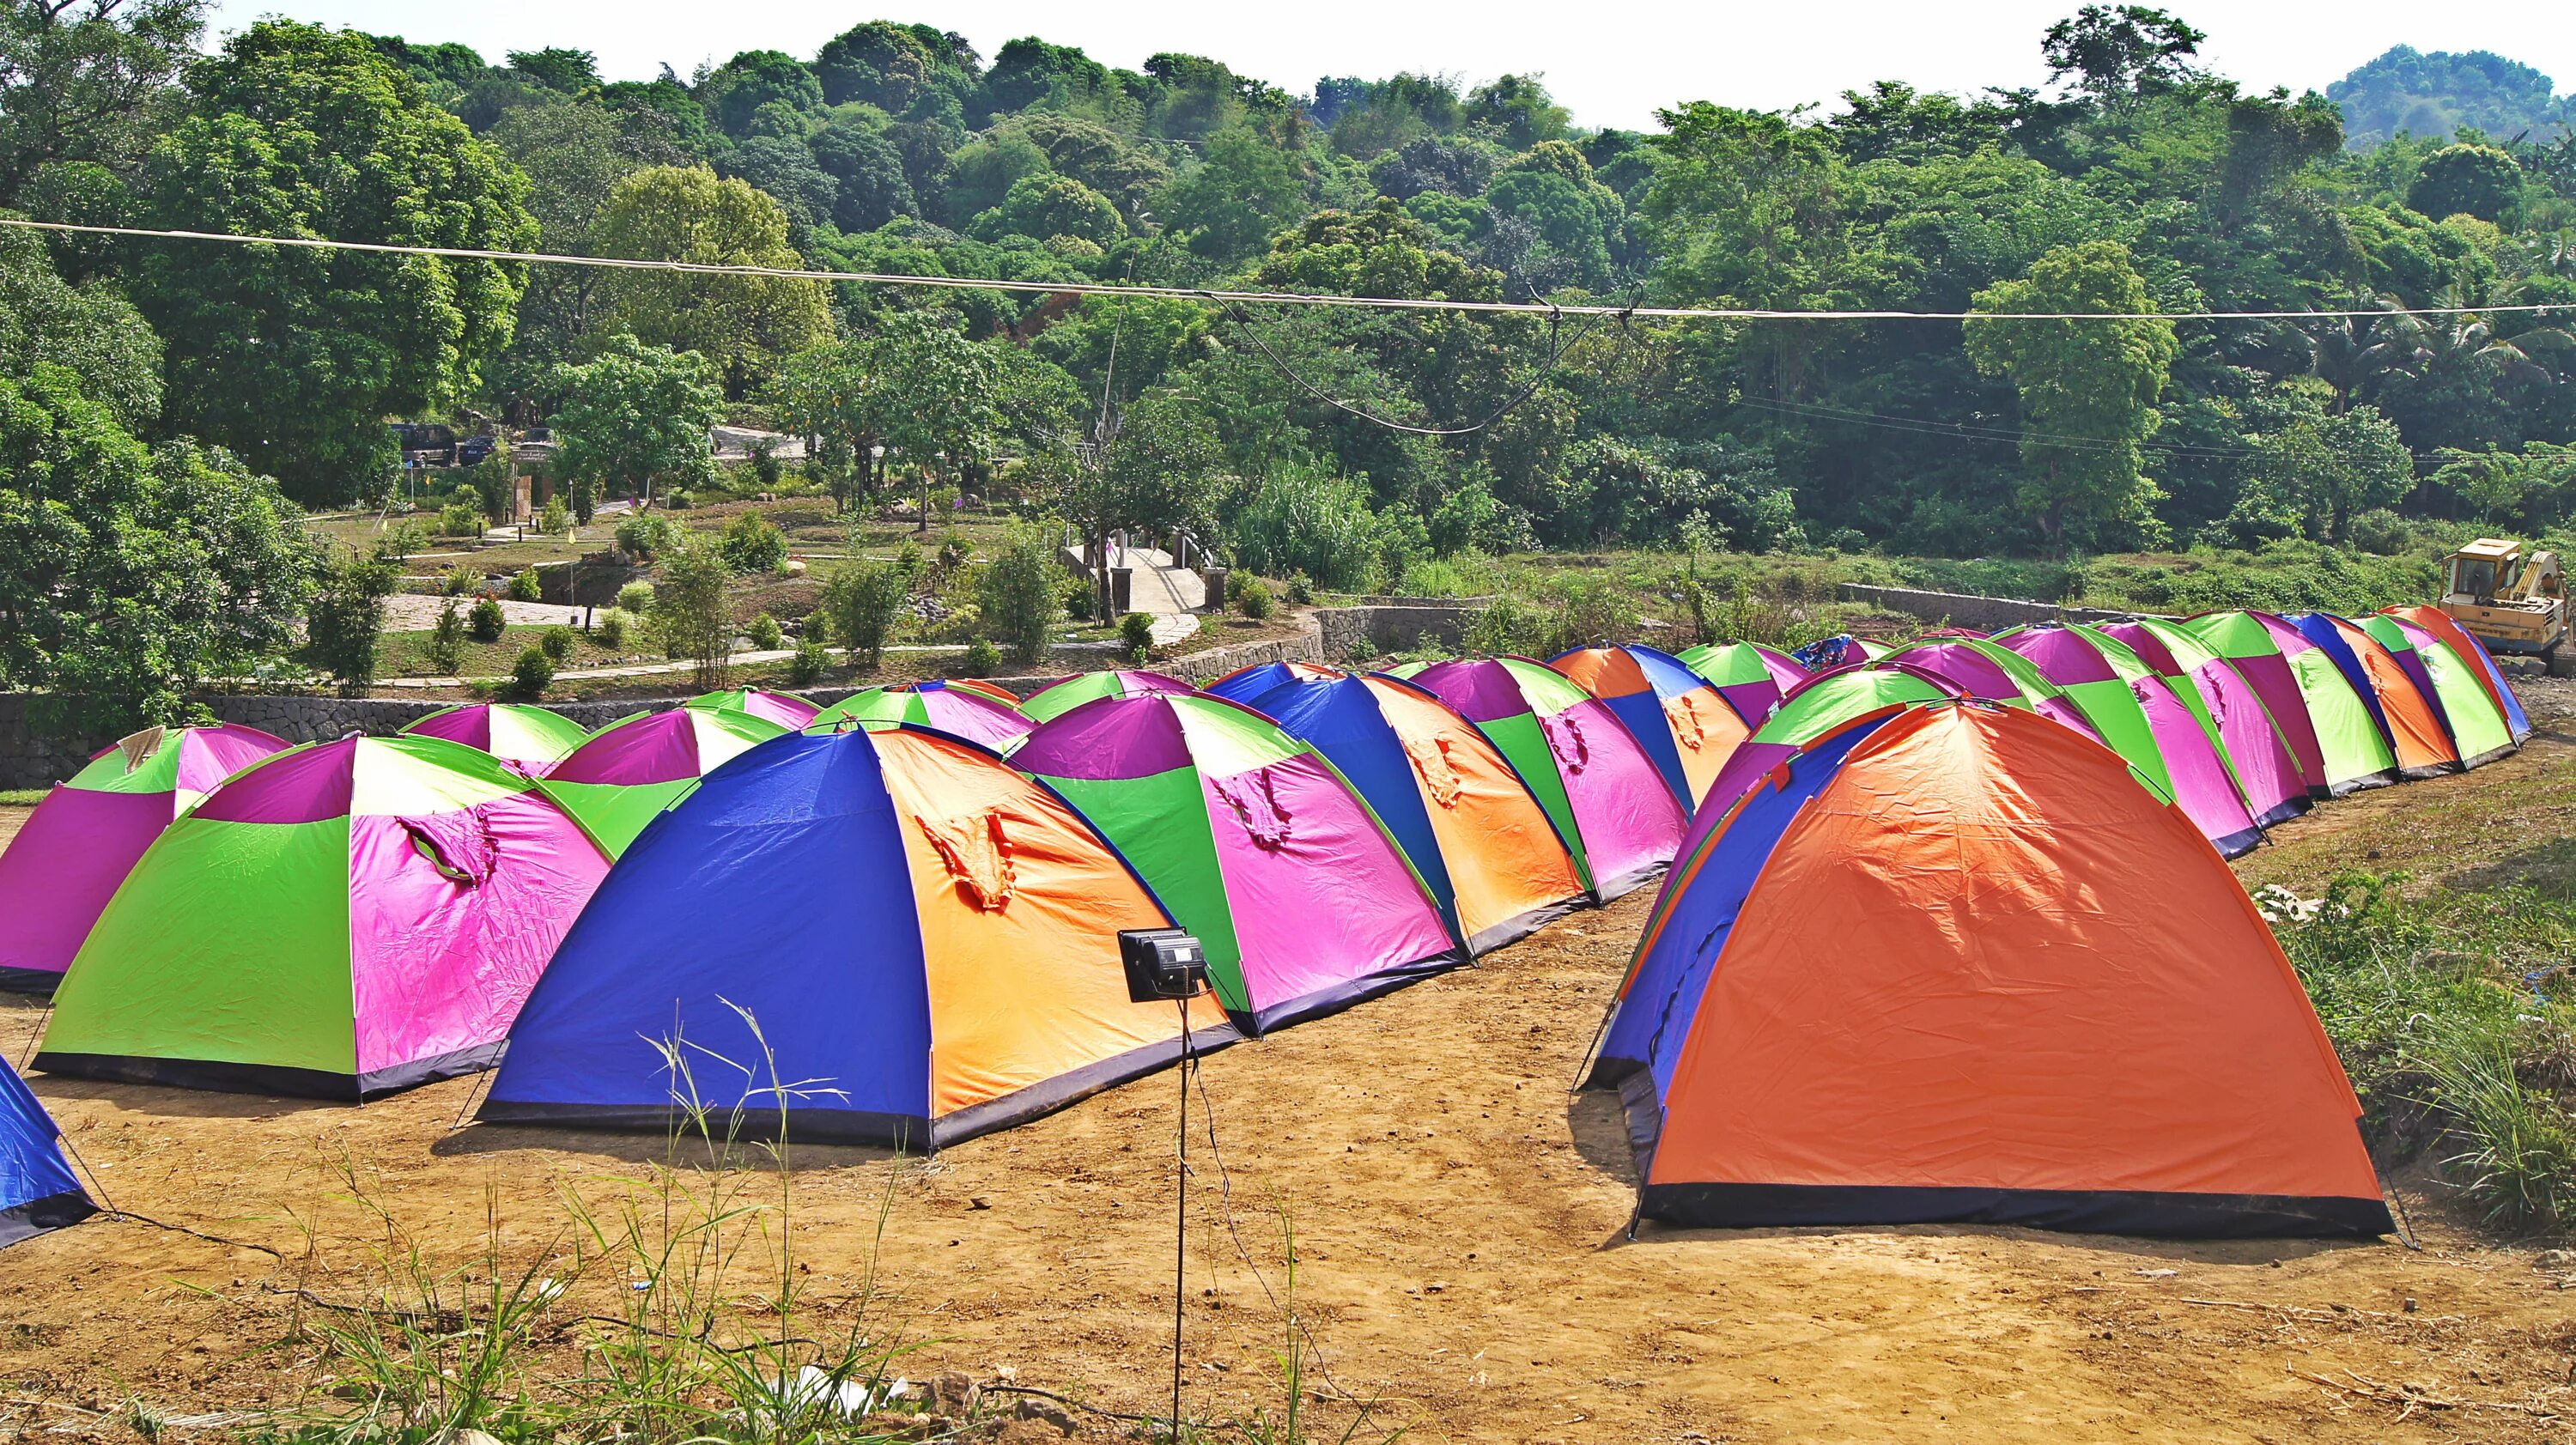 Camp company. Палатка на природе. Палатка для праздника. Эдвенче Камп. Adventure Camping.